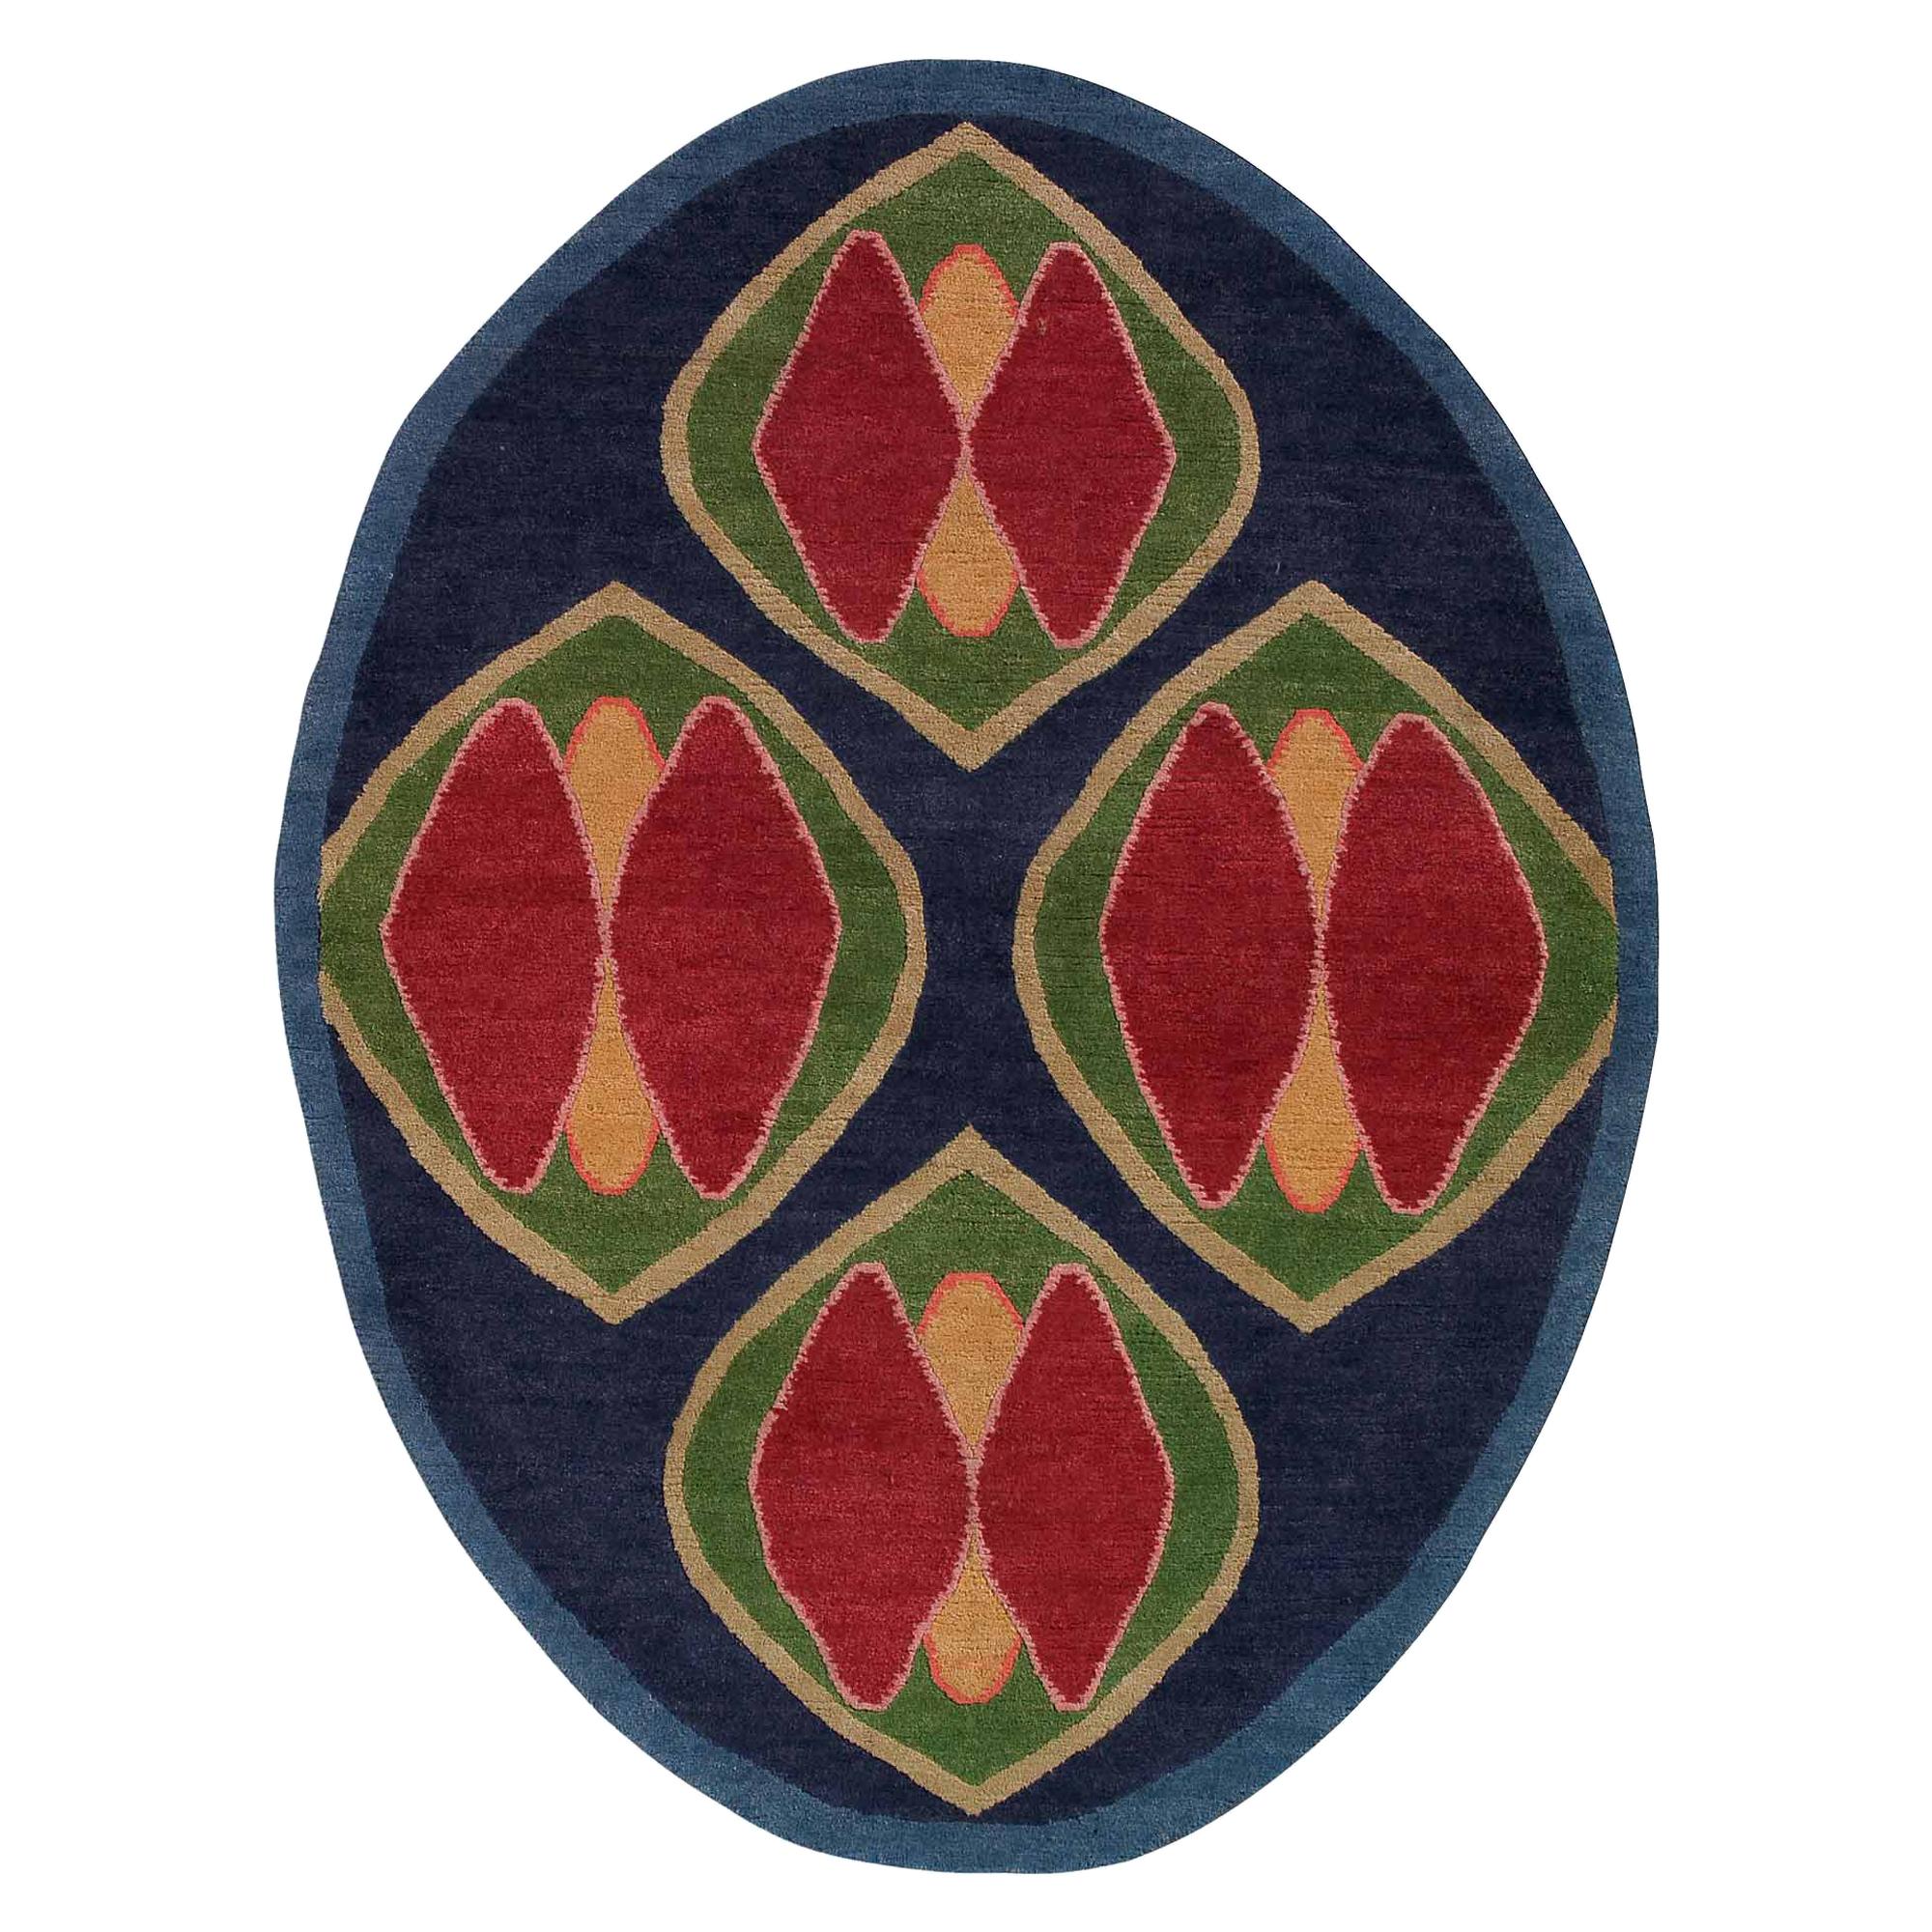 MCH3 Woollen Carpet by Maria Cristina Hamel for Post Design Collection/Memphis